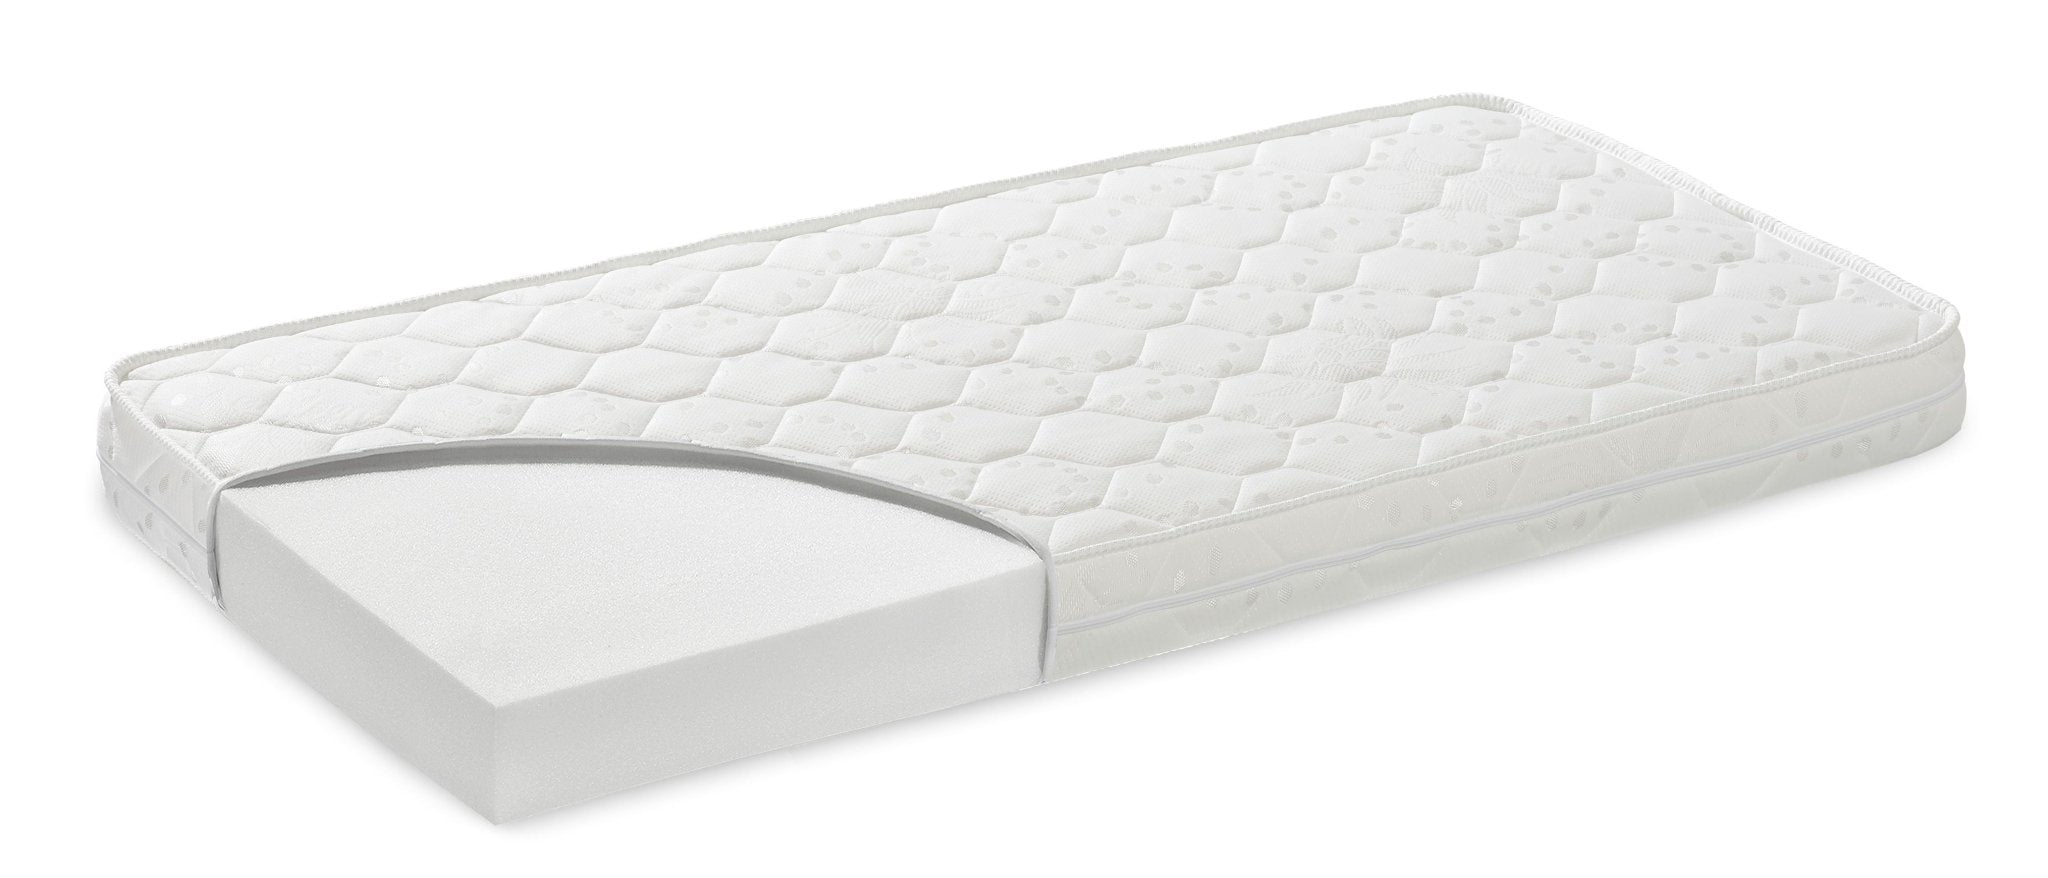 Prestige mattress 120x60 cm - Scandinavian Stories by Marton